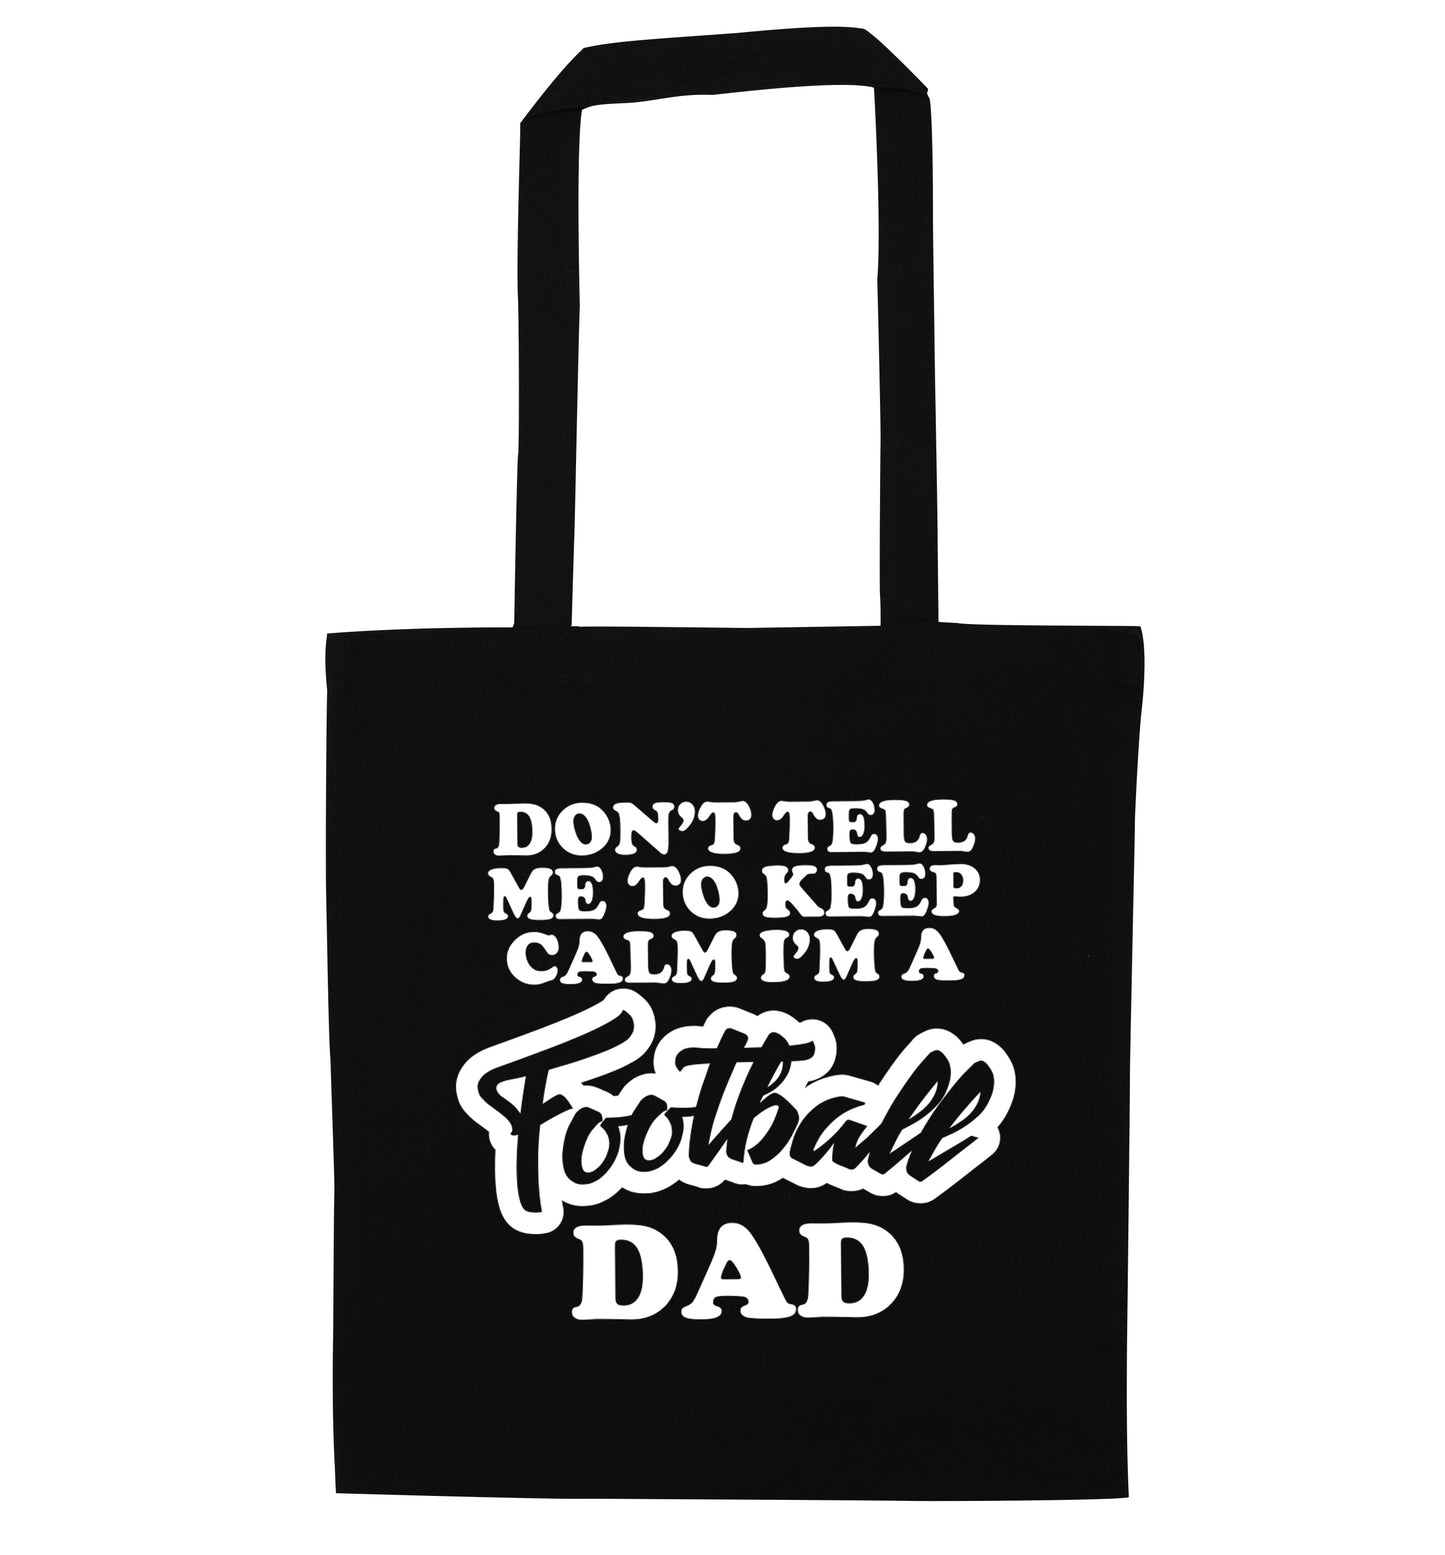 Don't tell me to keep calm I'm a football grandad black tote bag